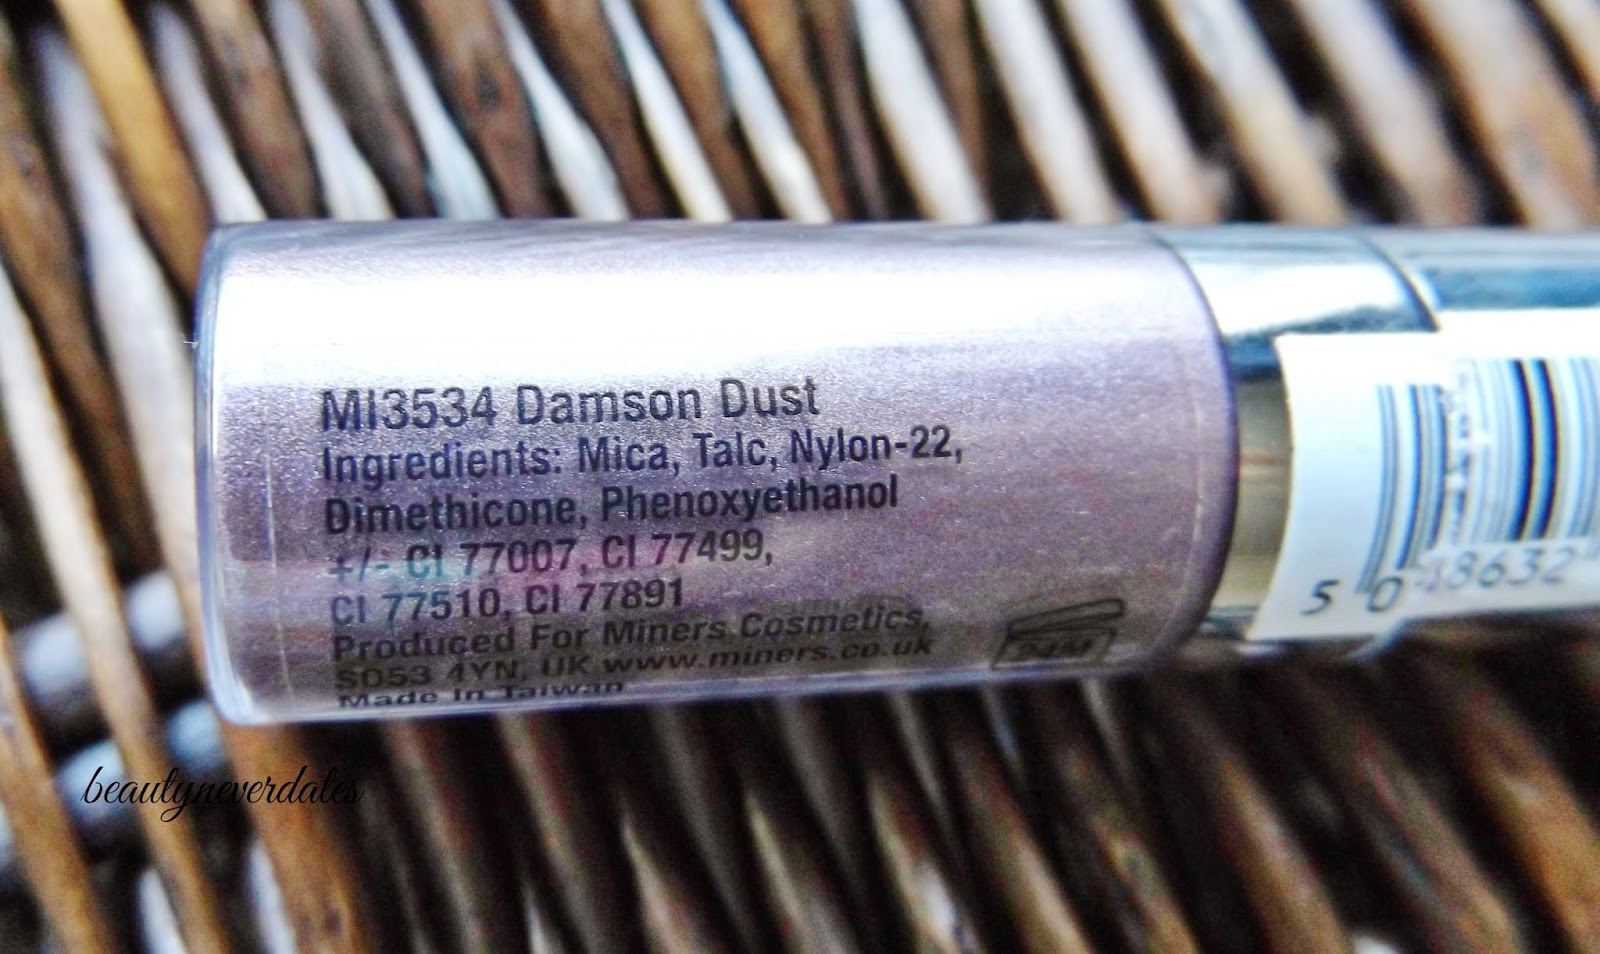 Miners Cosmetics Eyeshadow Dip and Define powder Damson dust